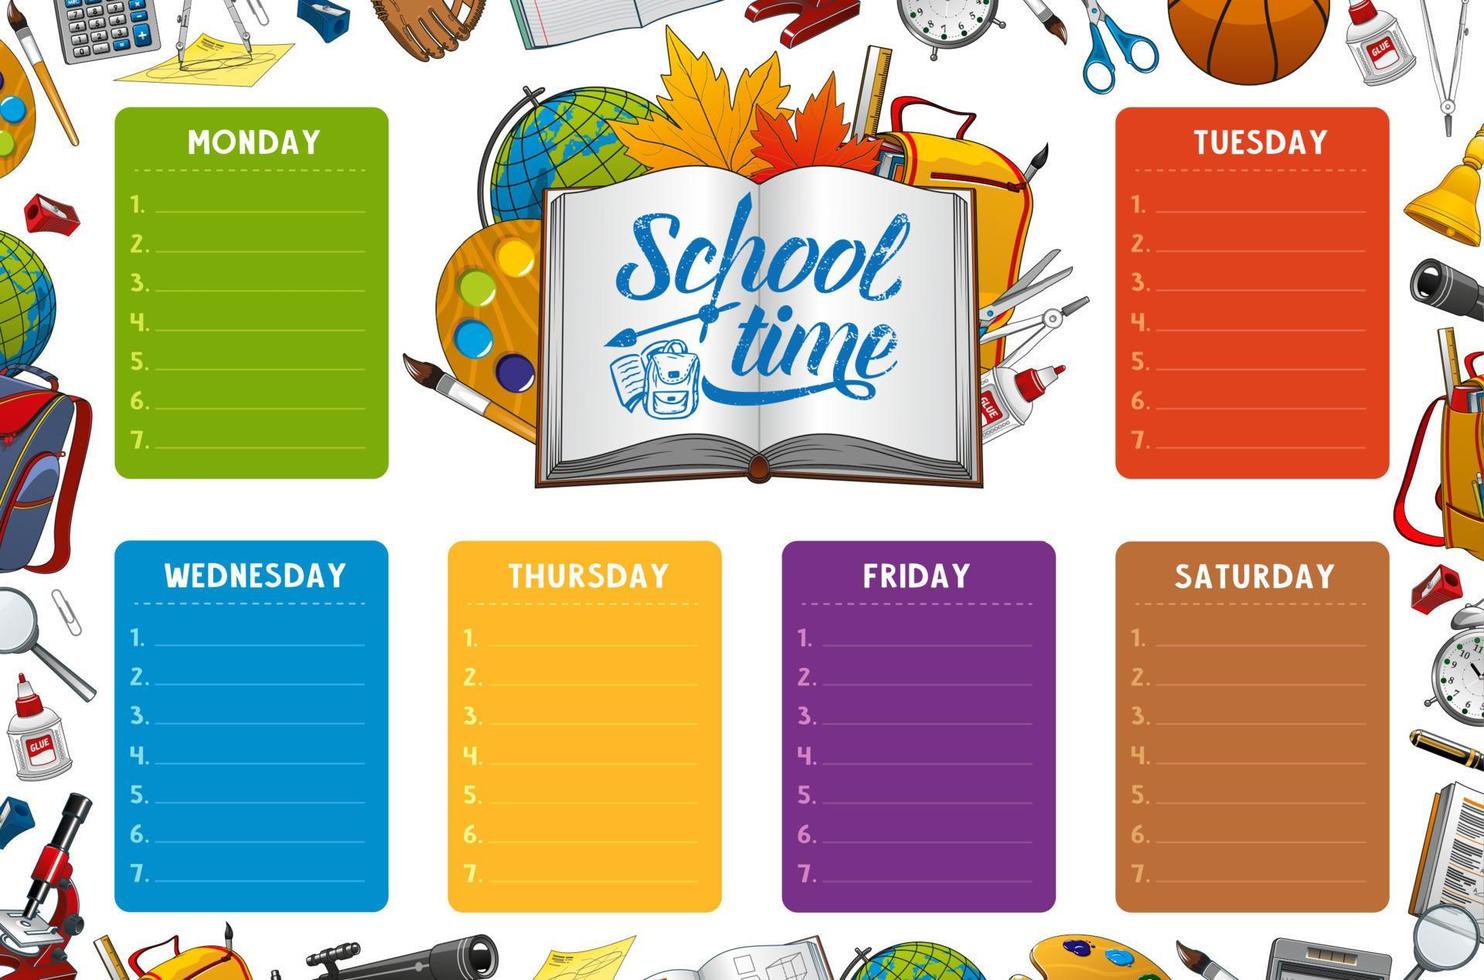 School timetable week schedule, color notes vector